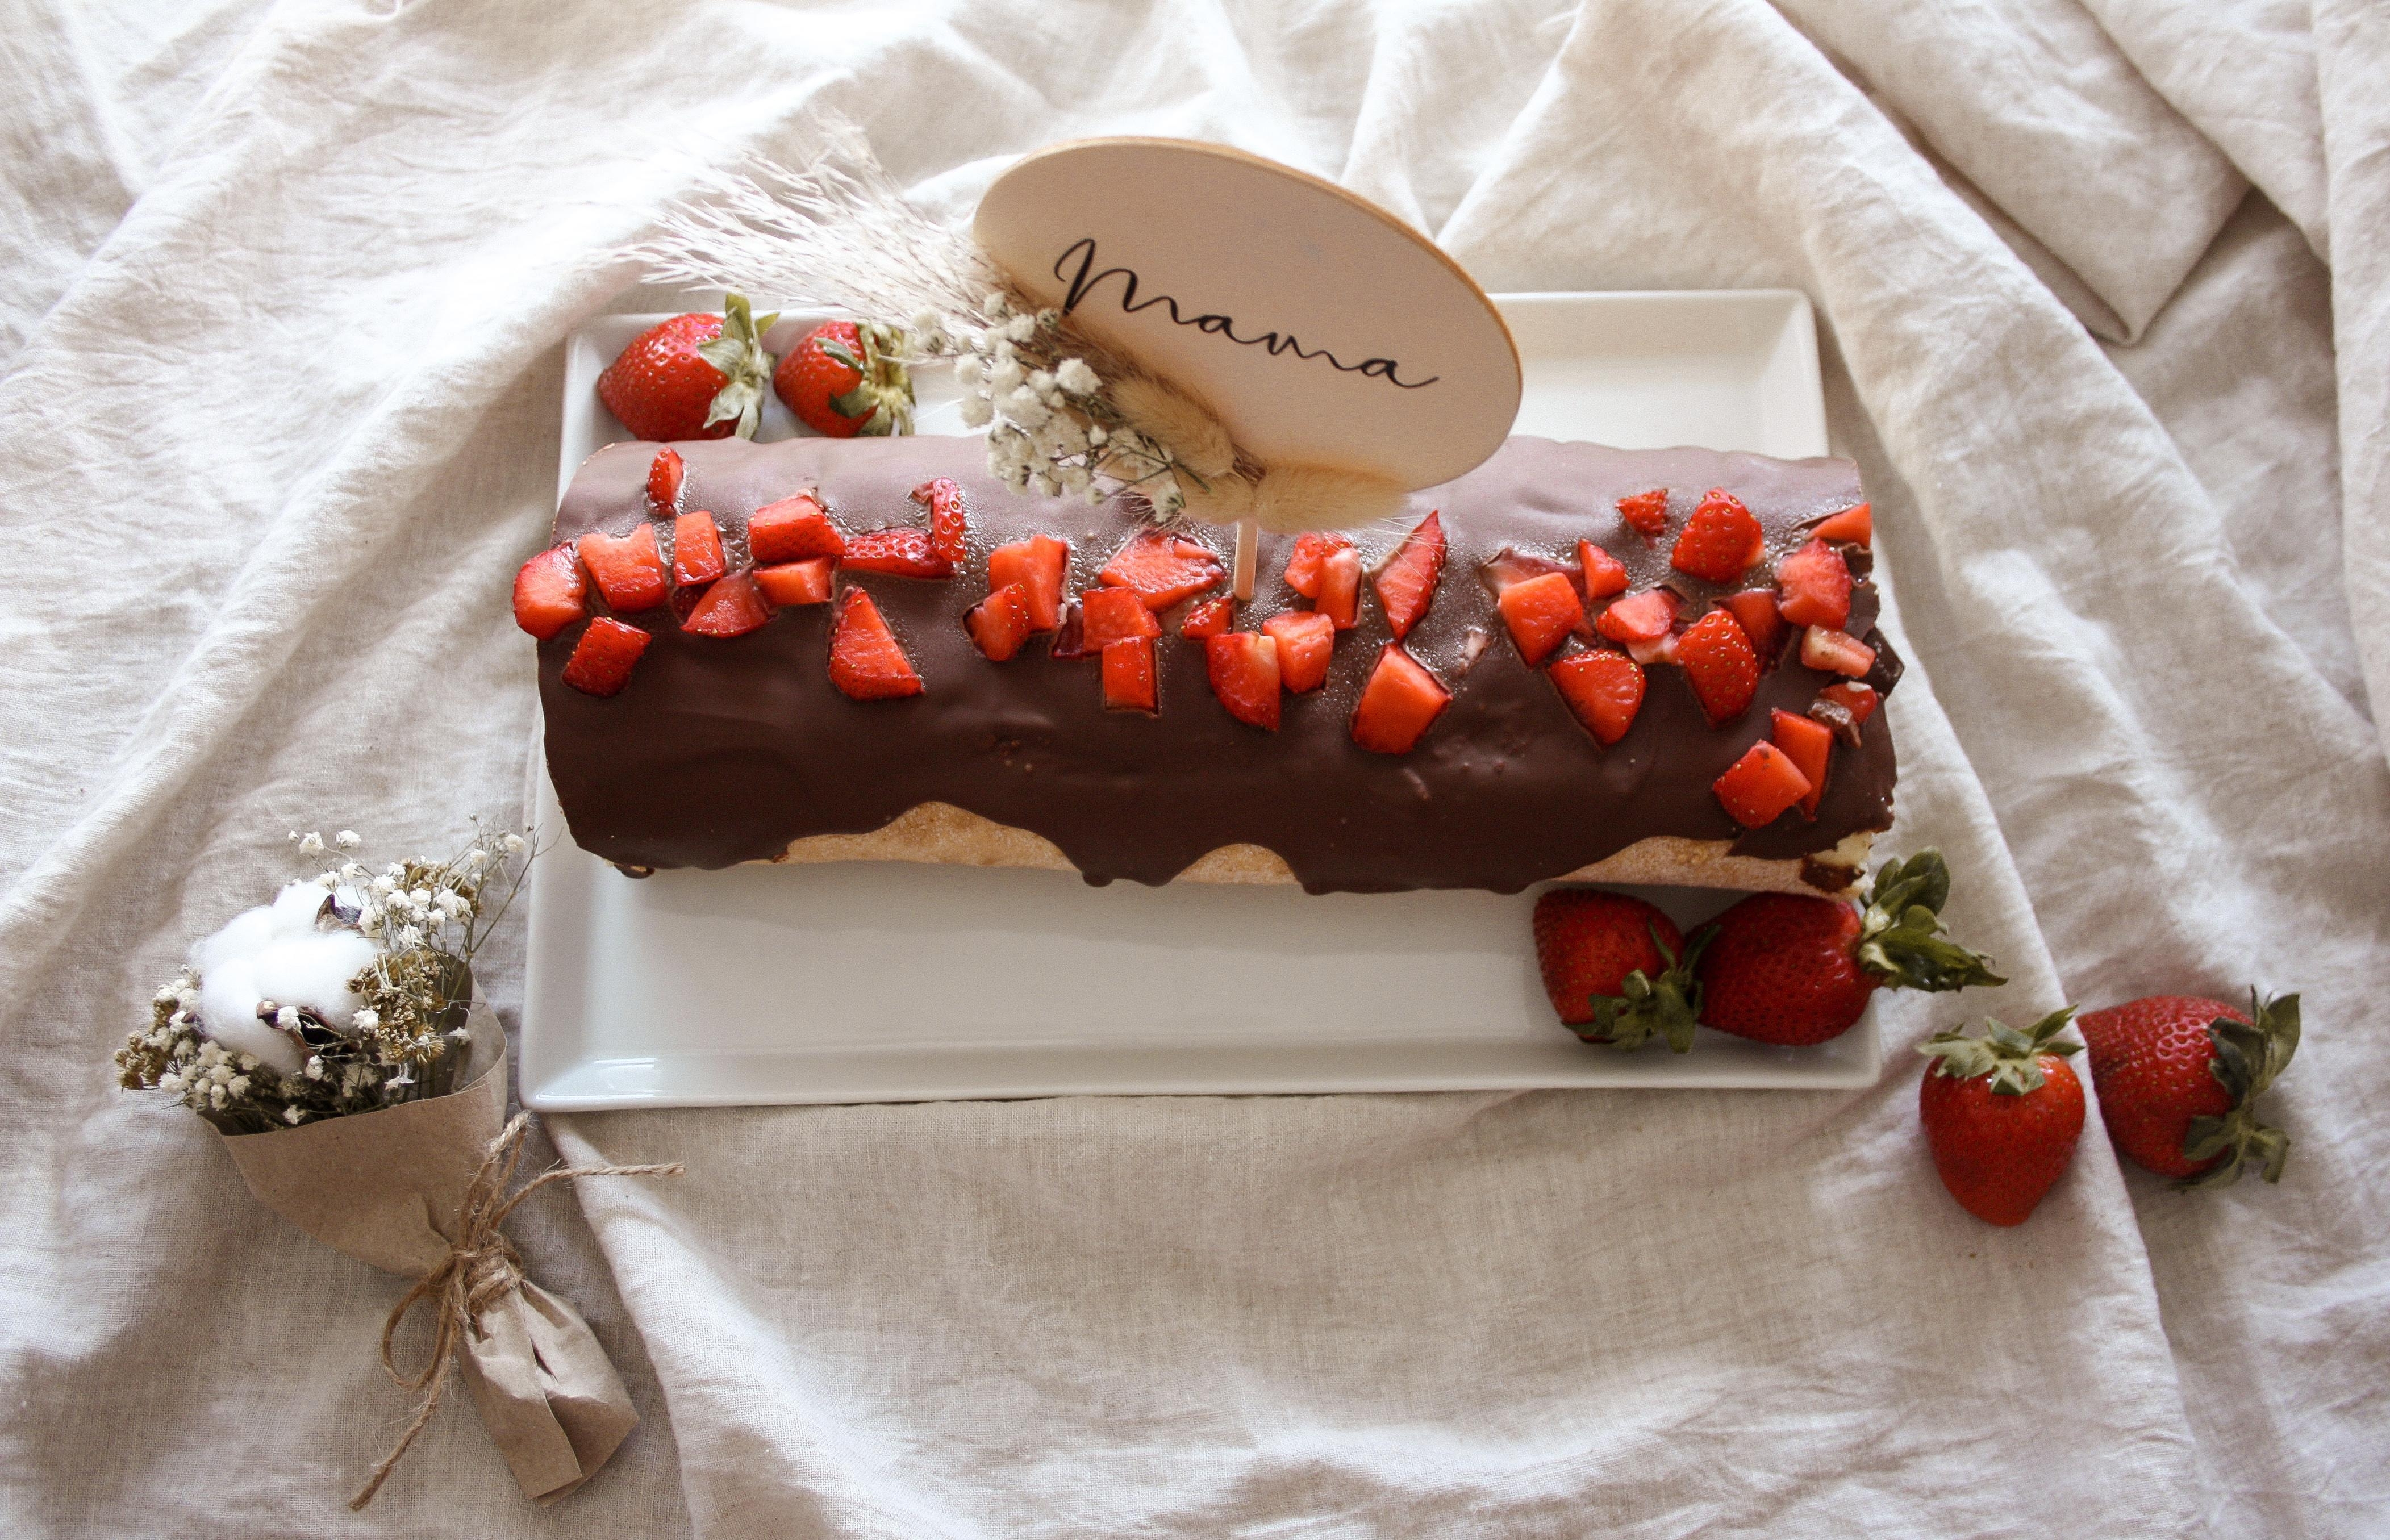 ♡ 𝙷𝚊𝚙𝚙𝚢 𝙼𝚘𝚝𝚑𝚎𝚛'𝚜 𝙳𝚊𝚢 ♡

#mama #backen #cake #cakelover #foodlover #onmytable 